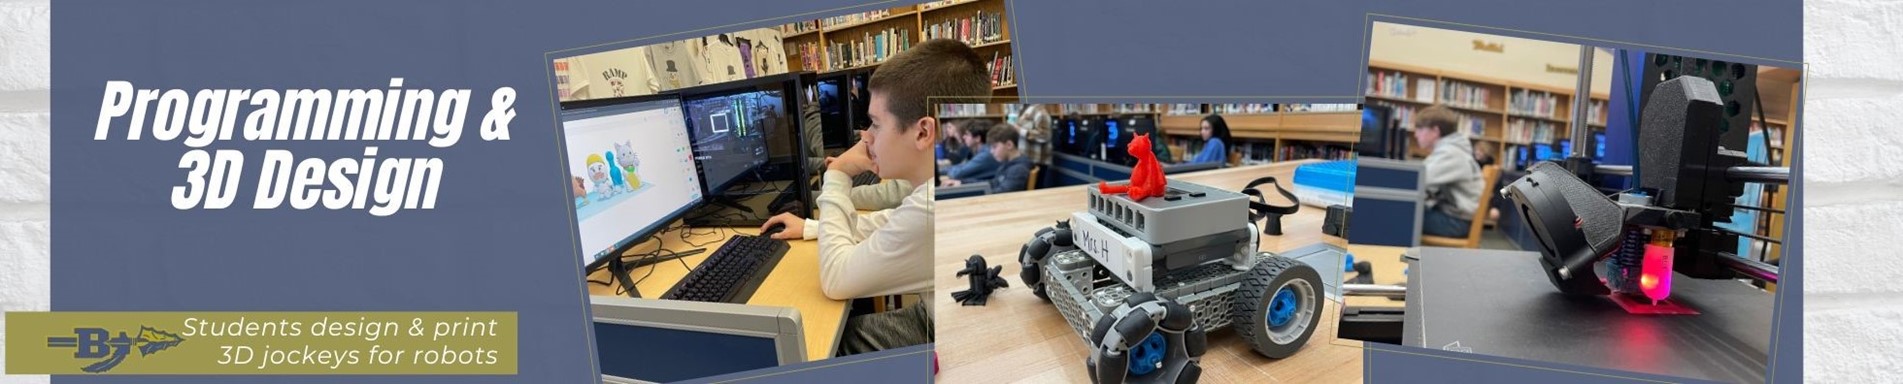 Programming students design and print 3D jockeys for robots